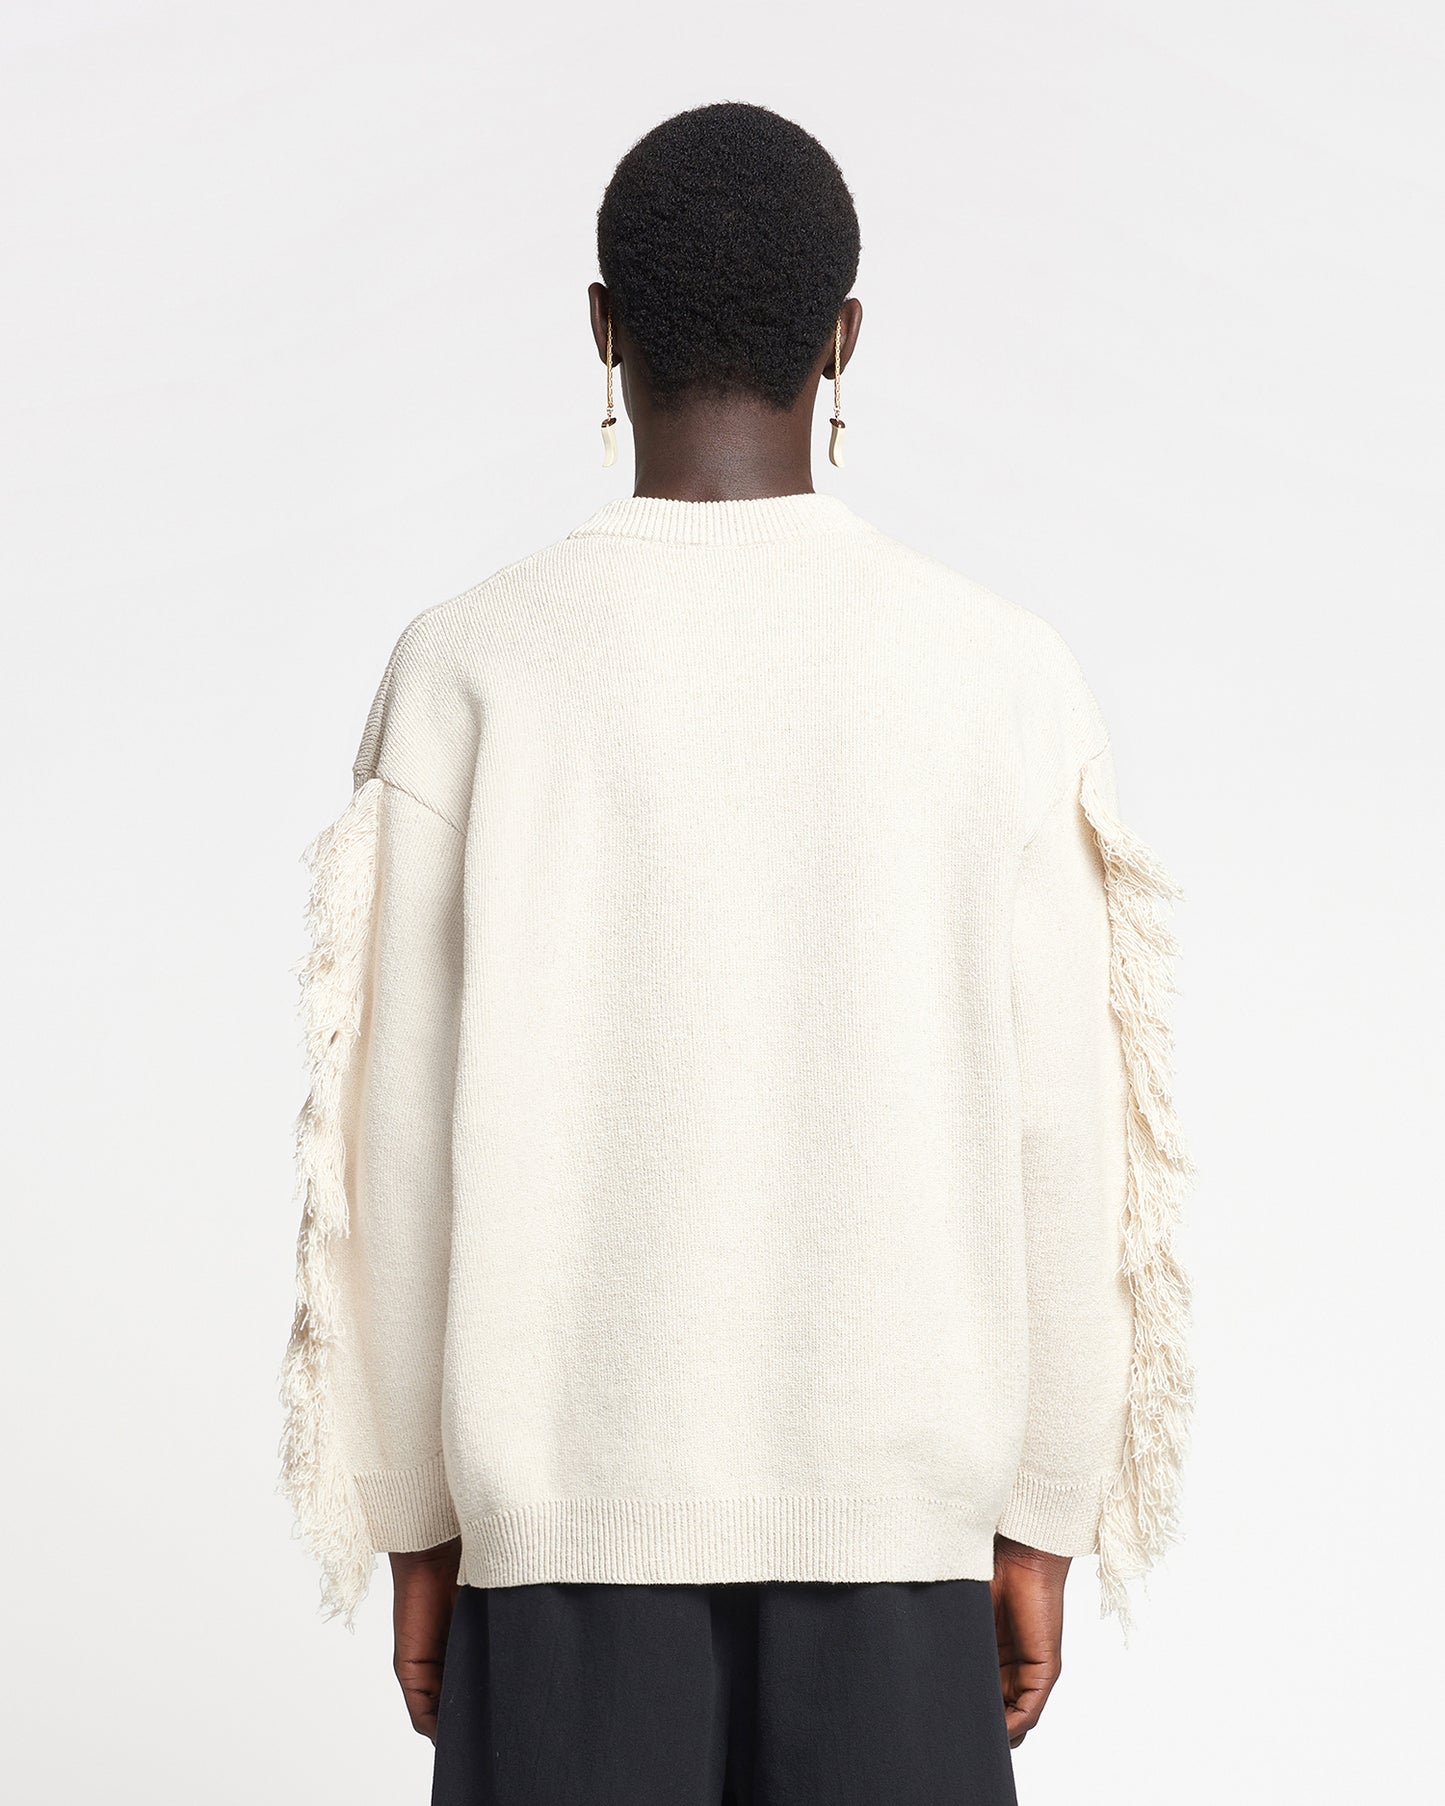 Julien - Fringed Textured-Linen Sweatshirt - Natural/Black